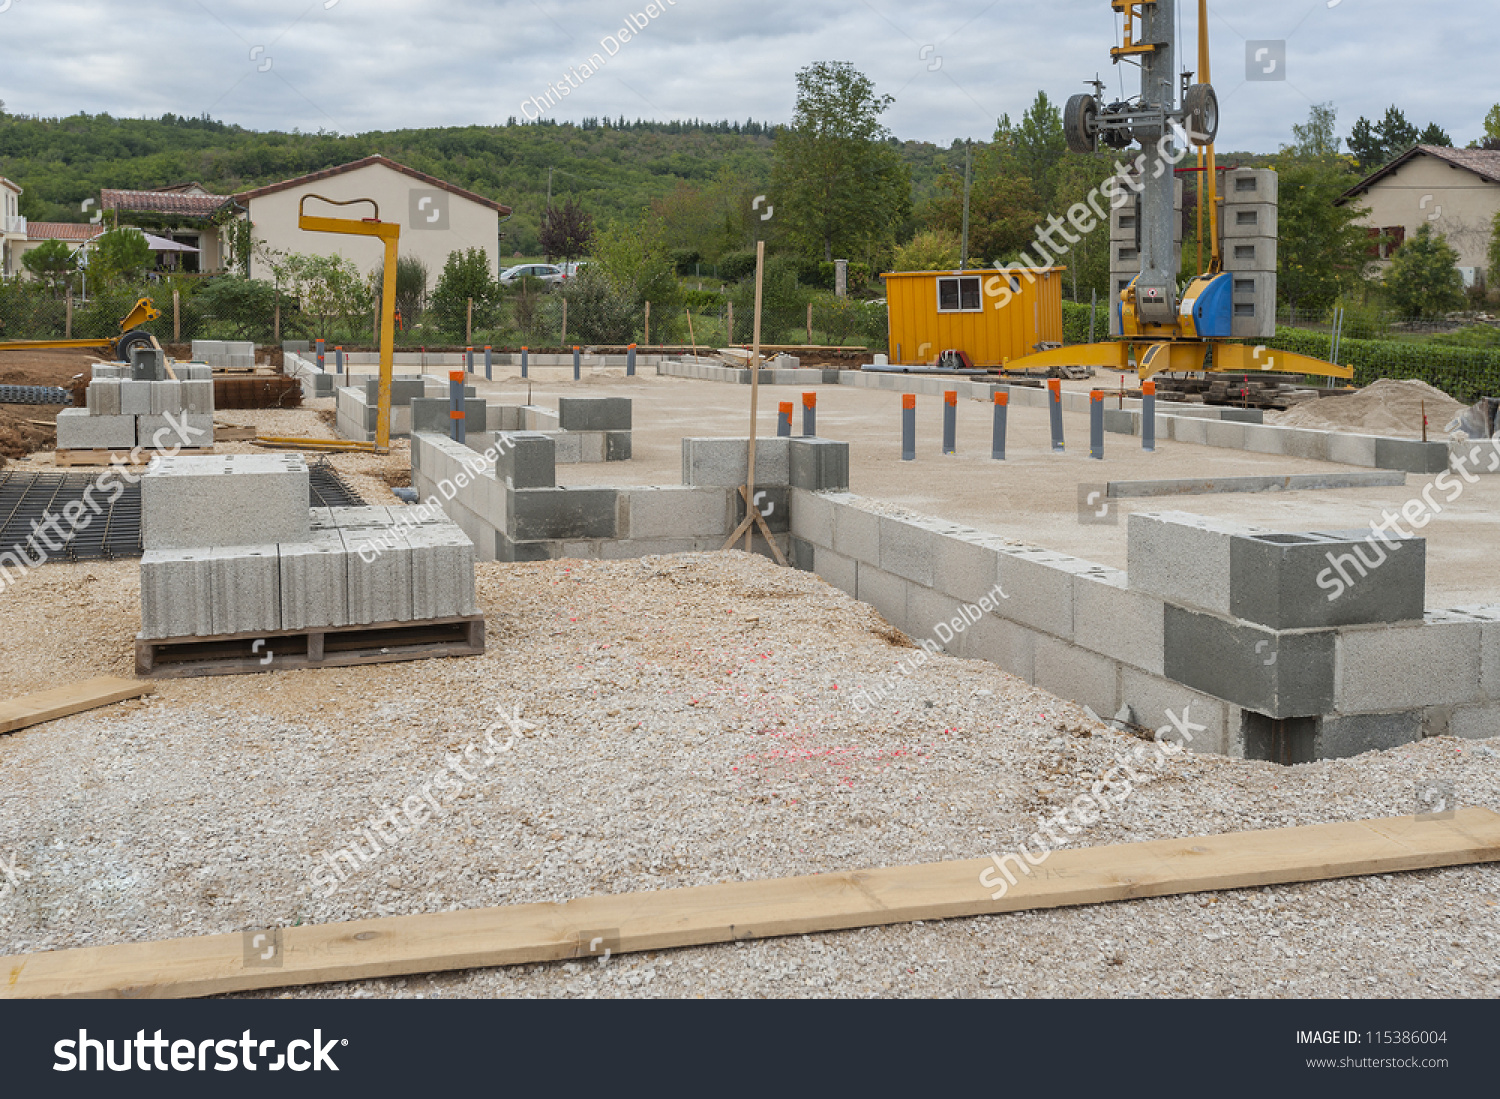 Cinder Block House Construction Stock Photo 115386004 : Shutterstock